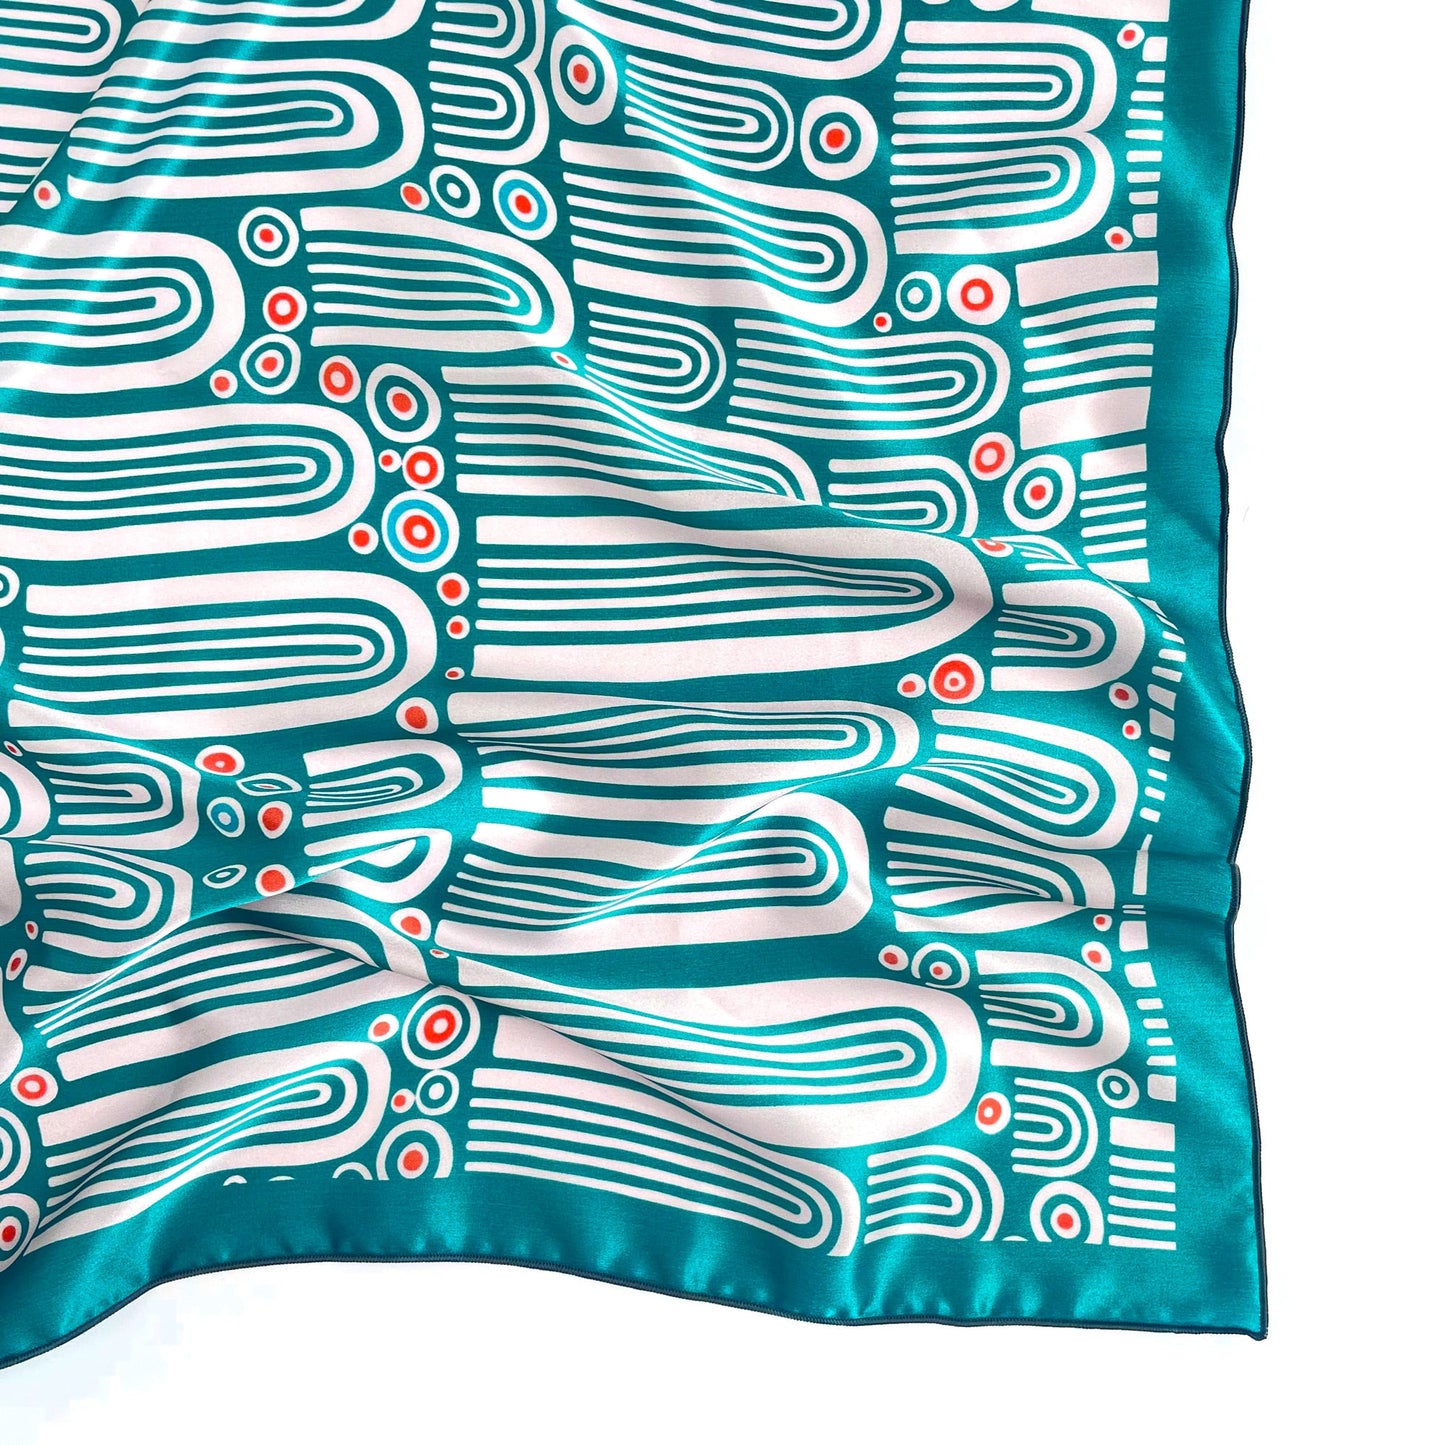 Big Tides - large teal silk scarf